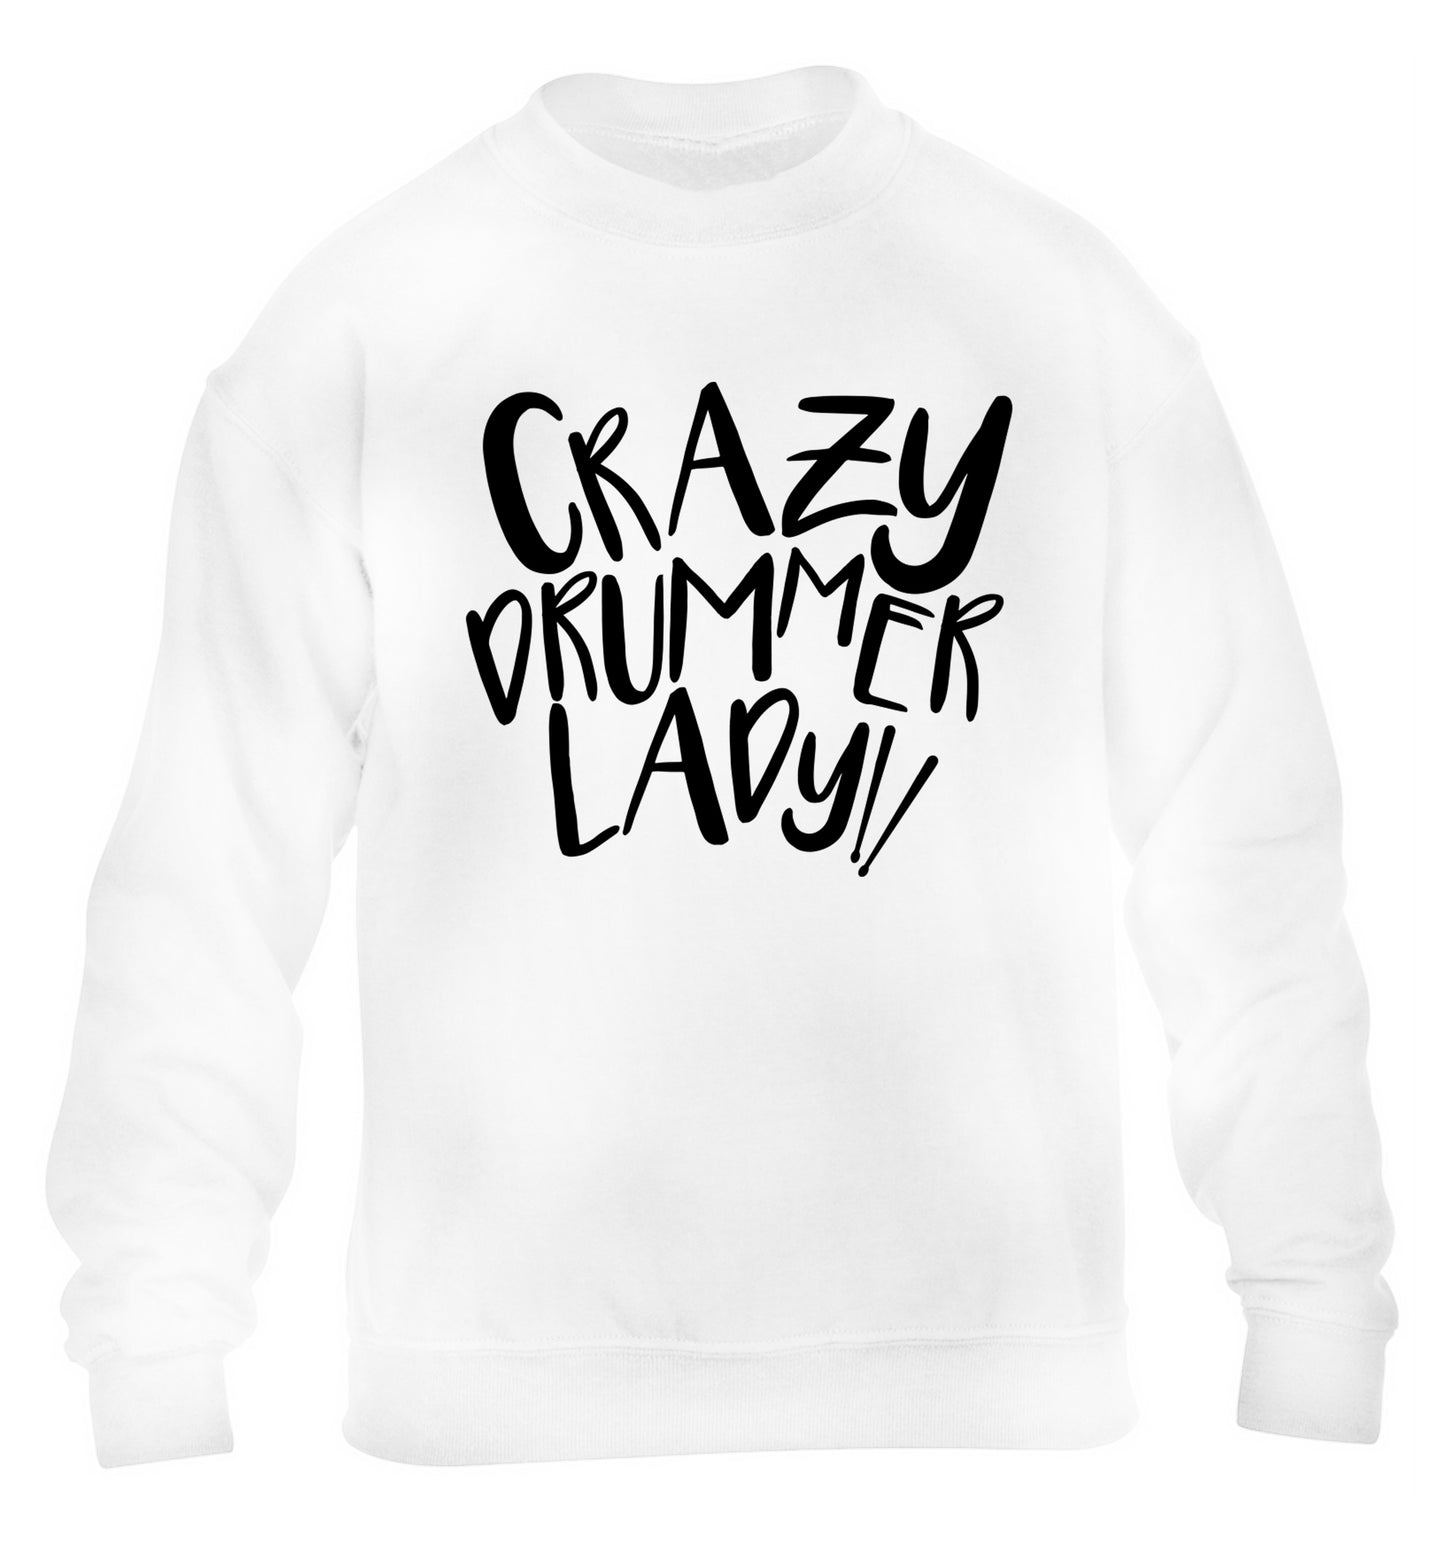 Crazy drummer lady children's white sweater 12-14 Years